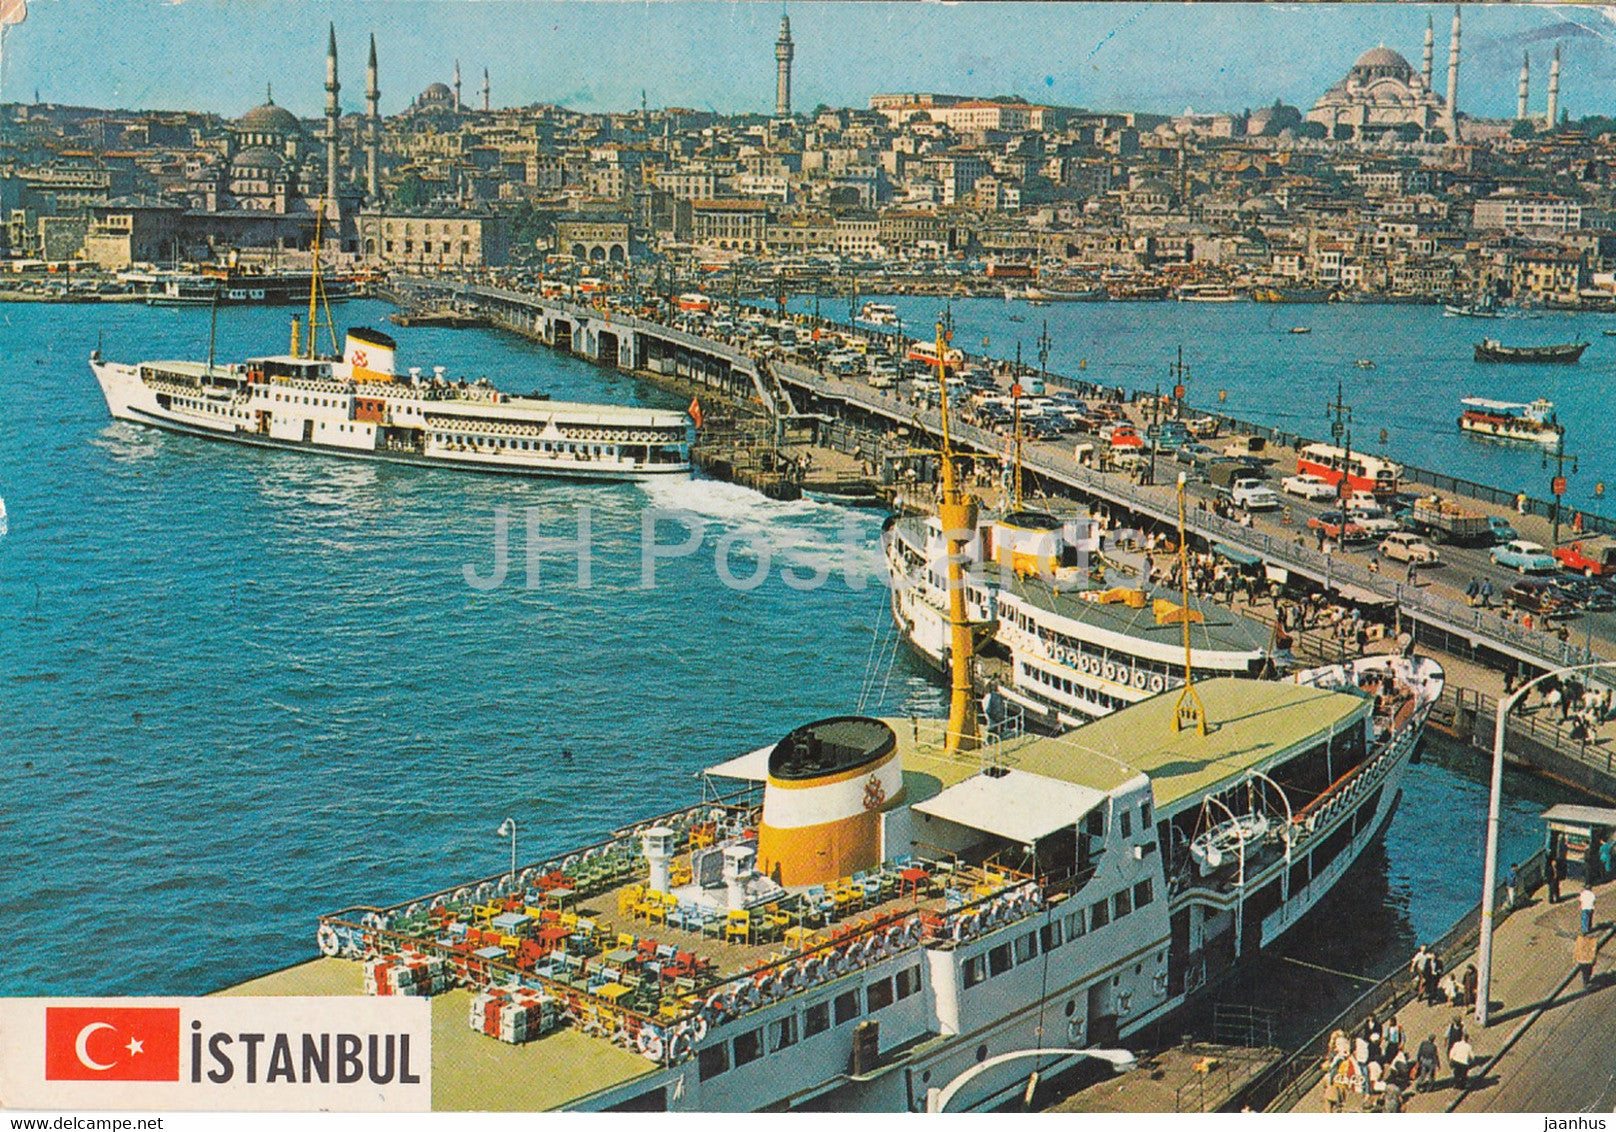 Istanbul - Galata Bridge - New Mosque and Suleymaniye - ship - car - 1978 - Turkey - used - JH Postcards